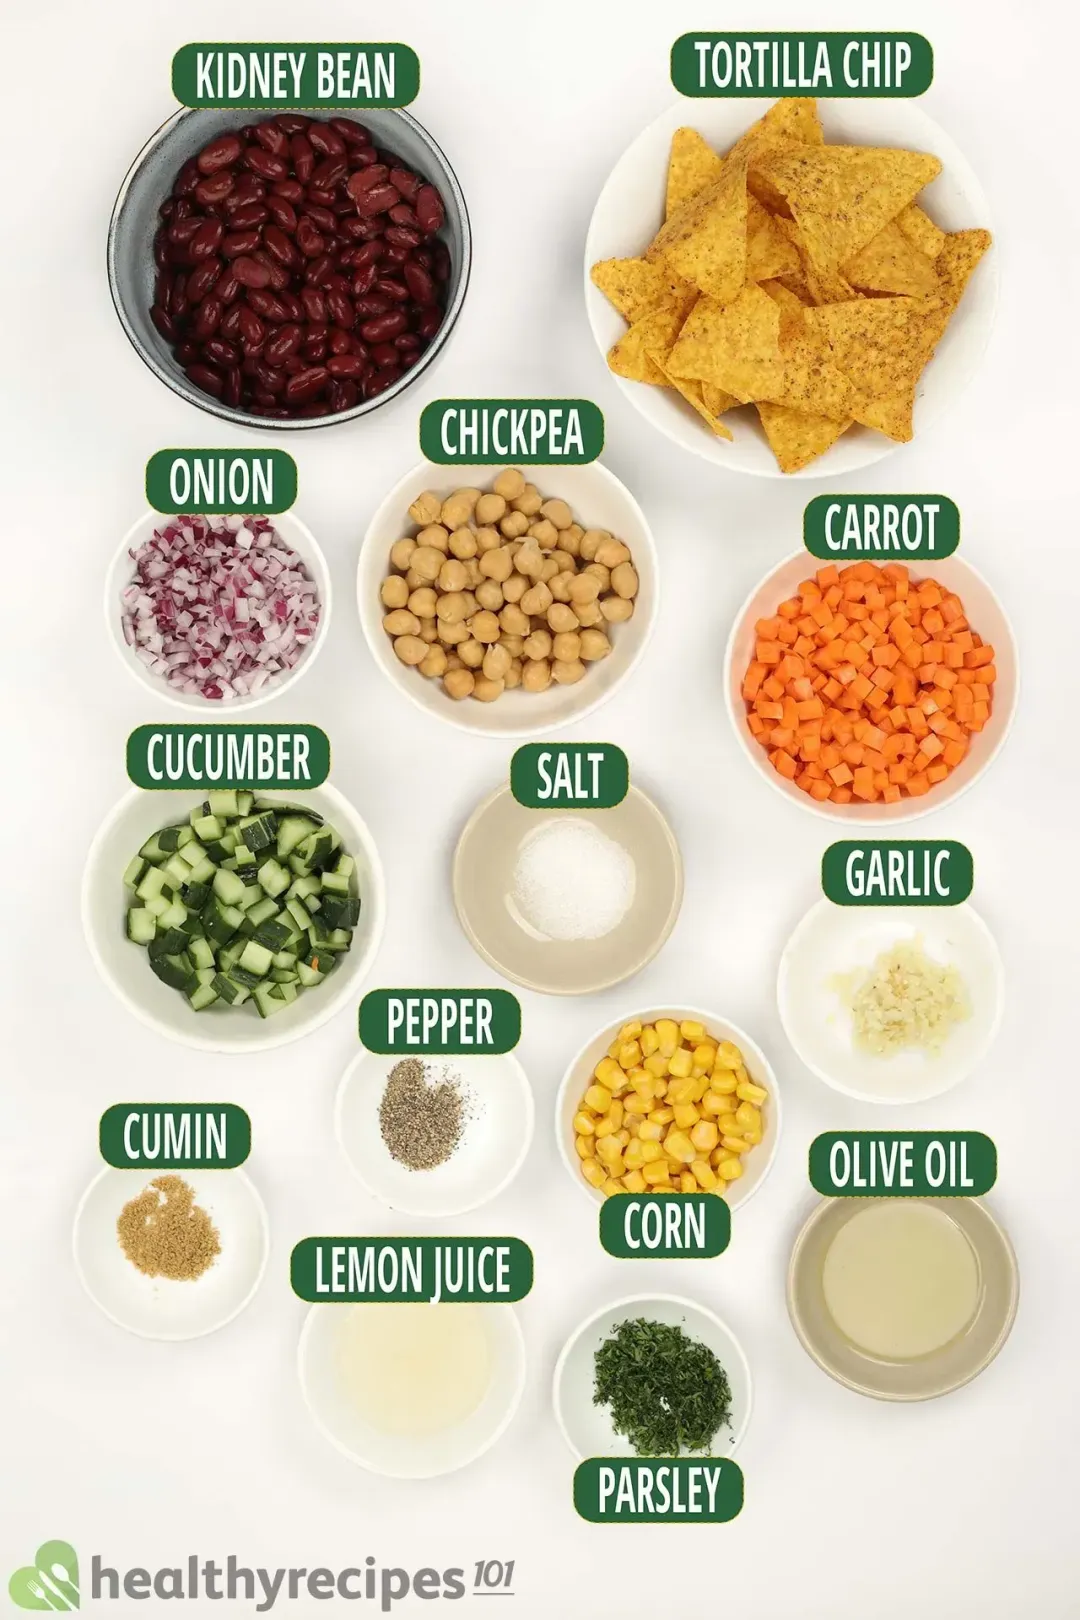 Ingredients for Kidney Bean Salad